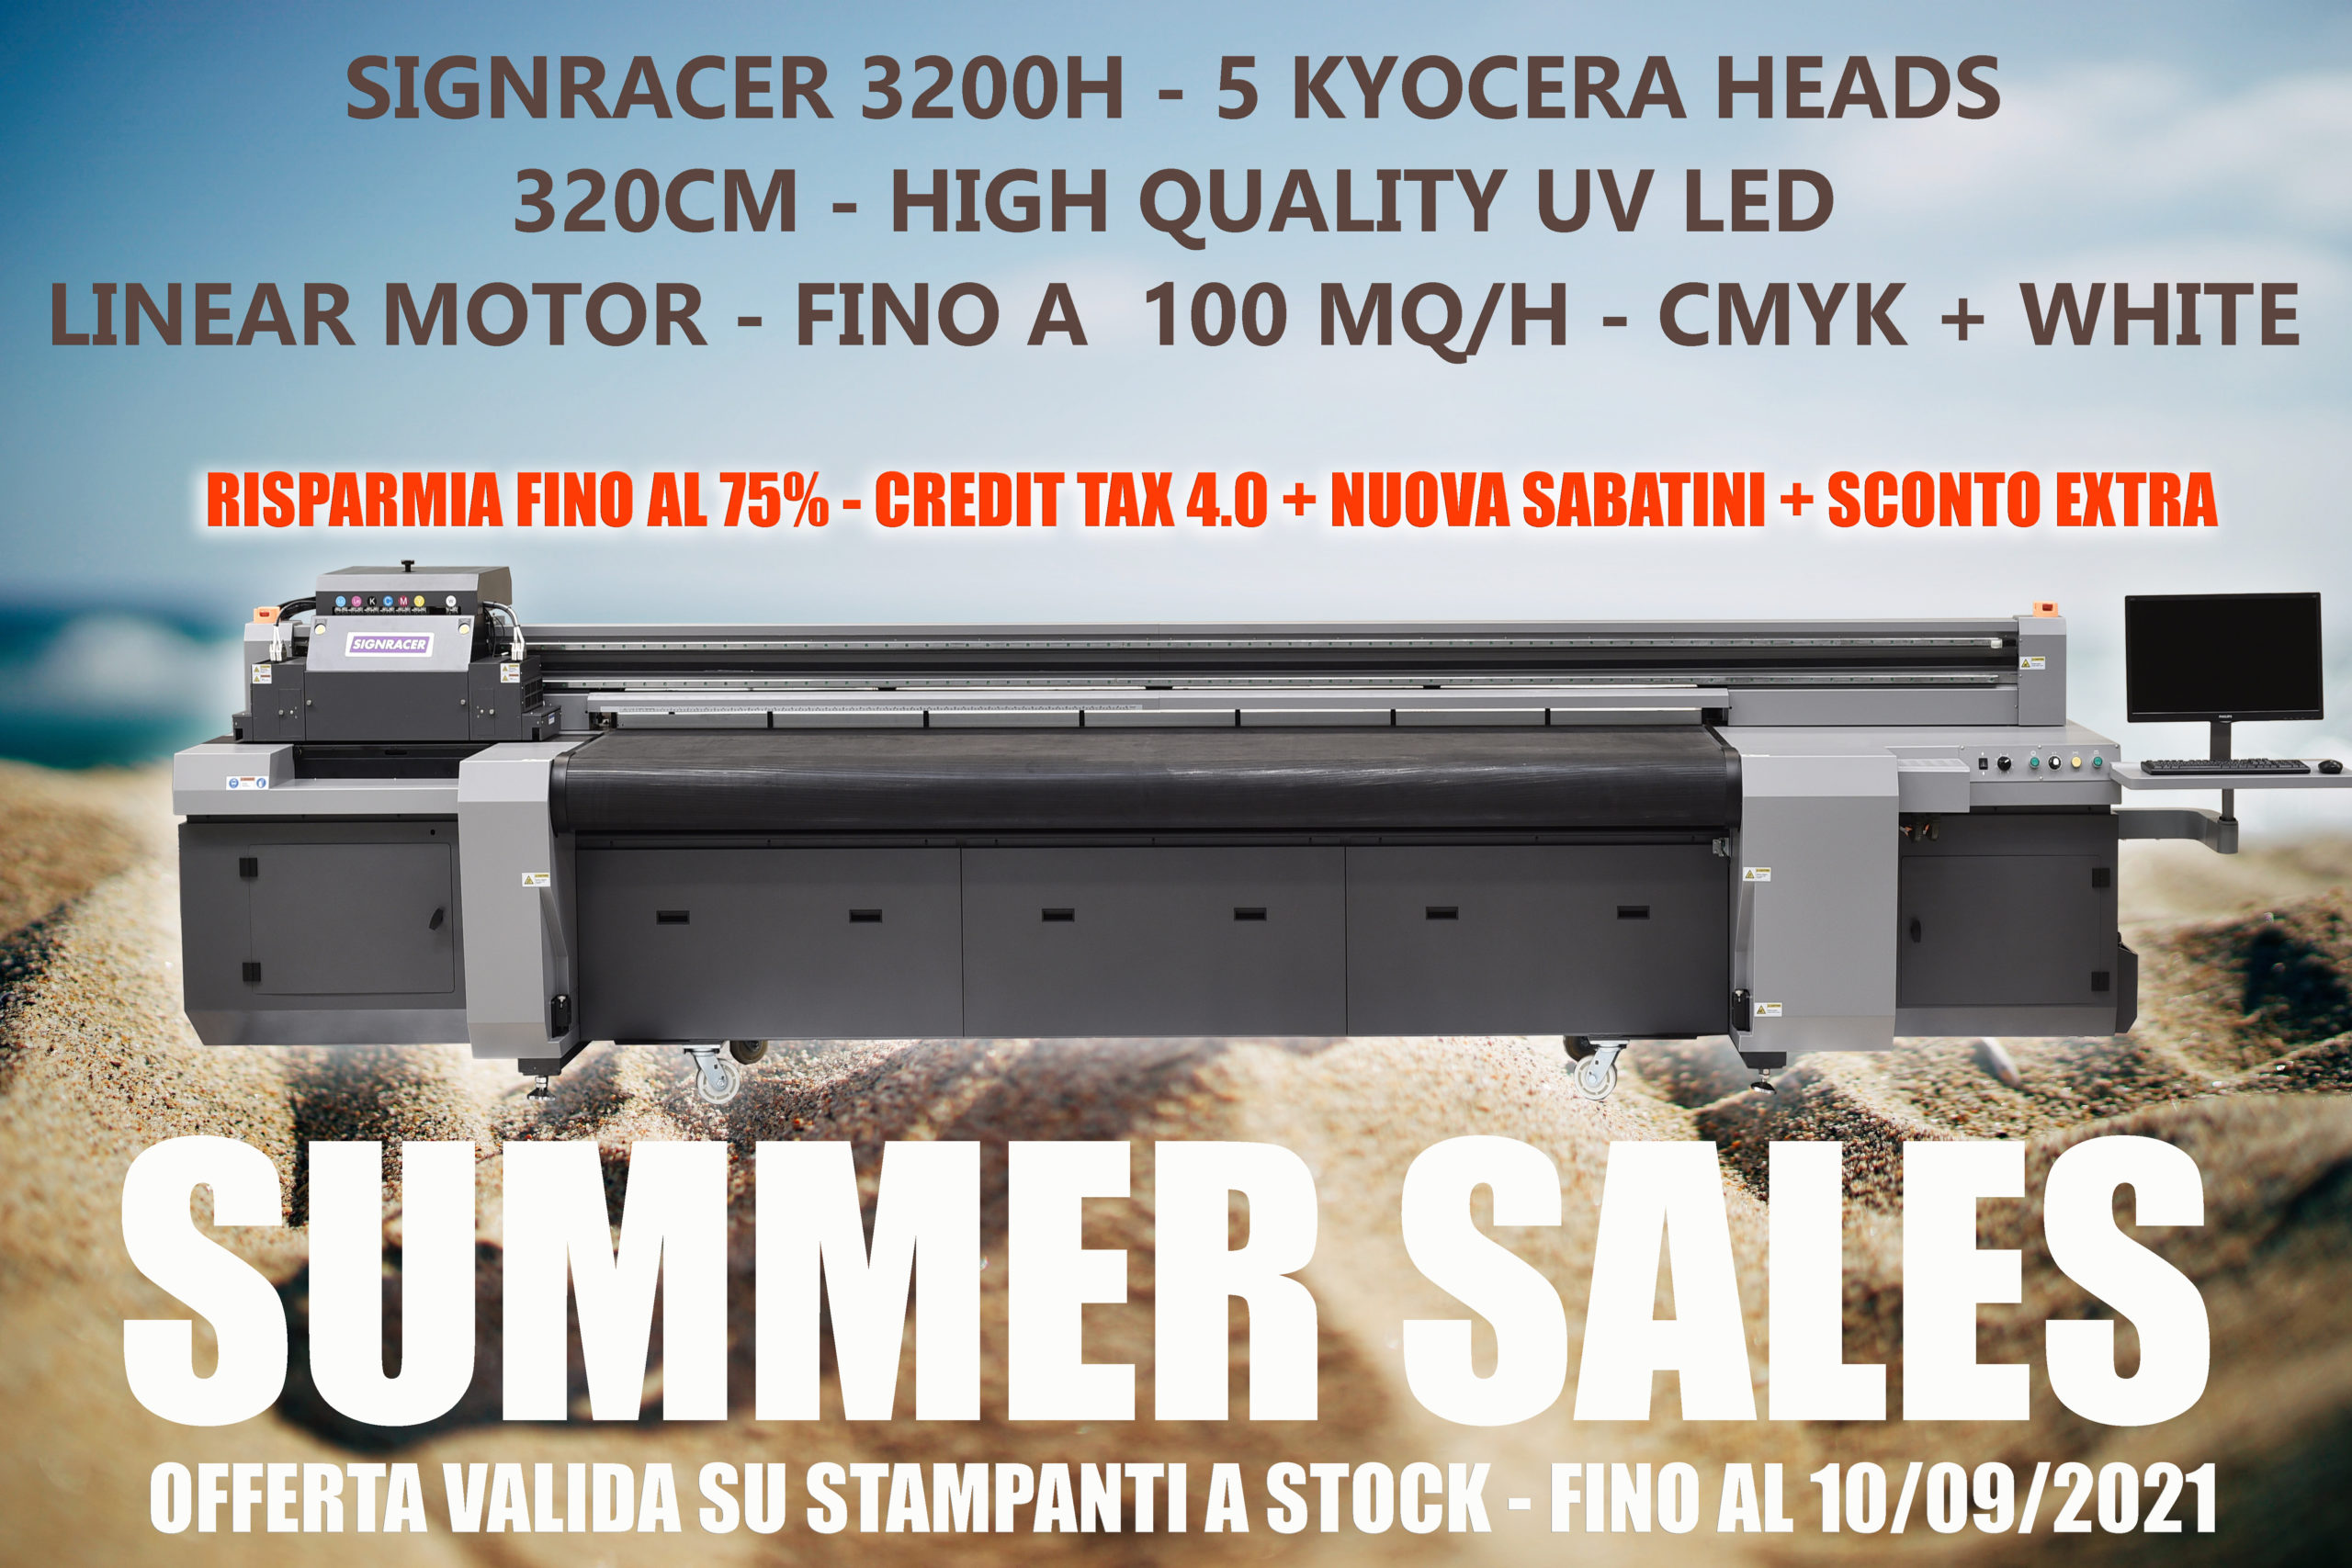 SUMMER SALES – 75% DI RISPARMIO SU SIGNRACER 3200 Hybrid Kyocera